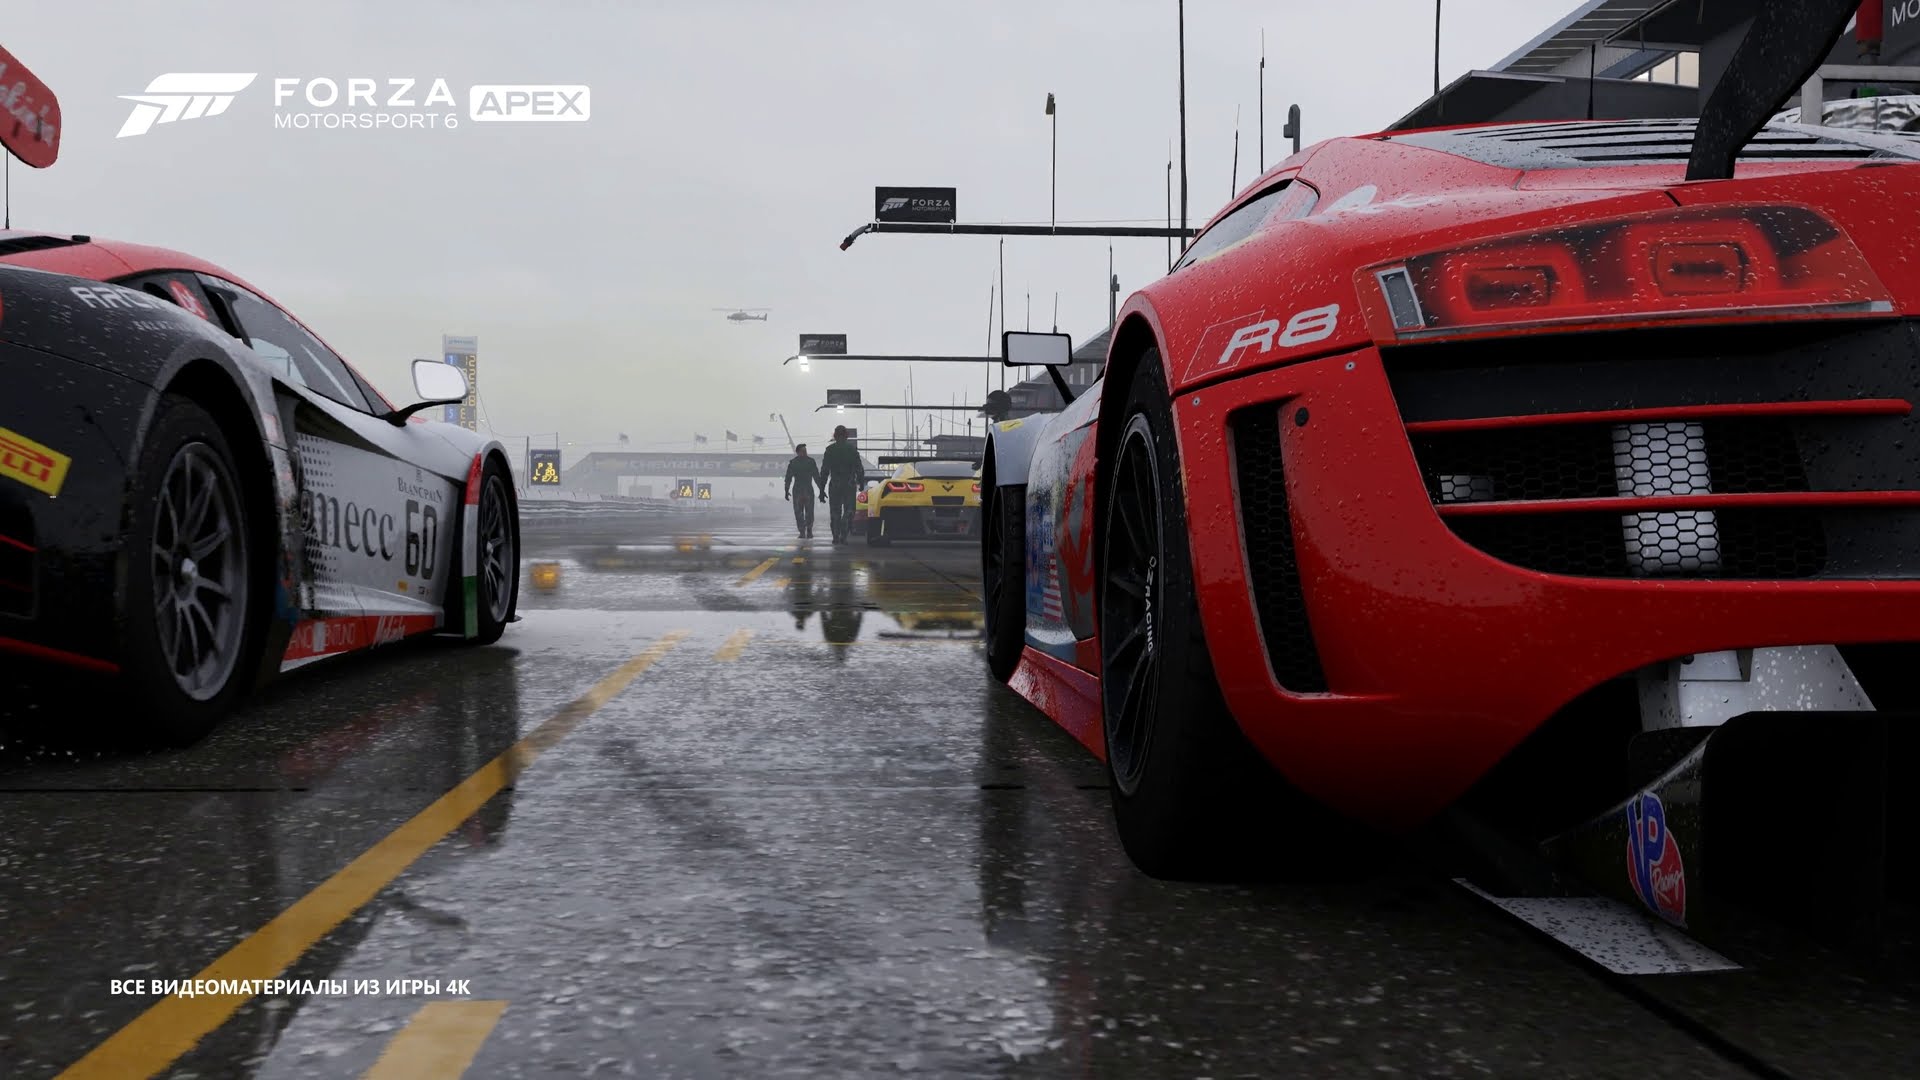 Forza Motorsport 6: Apex #19